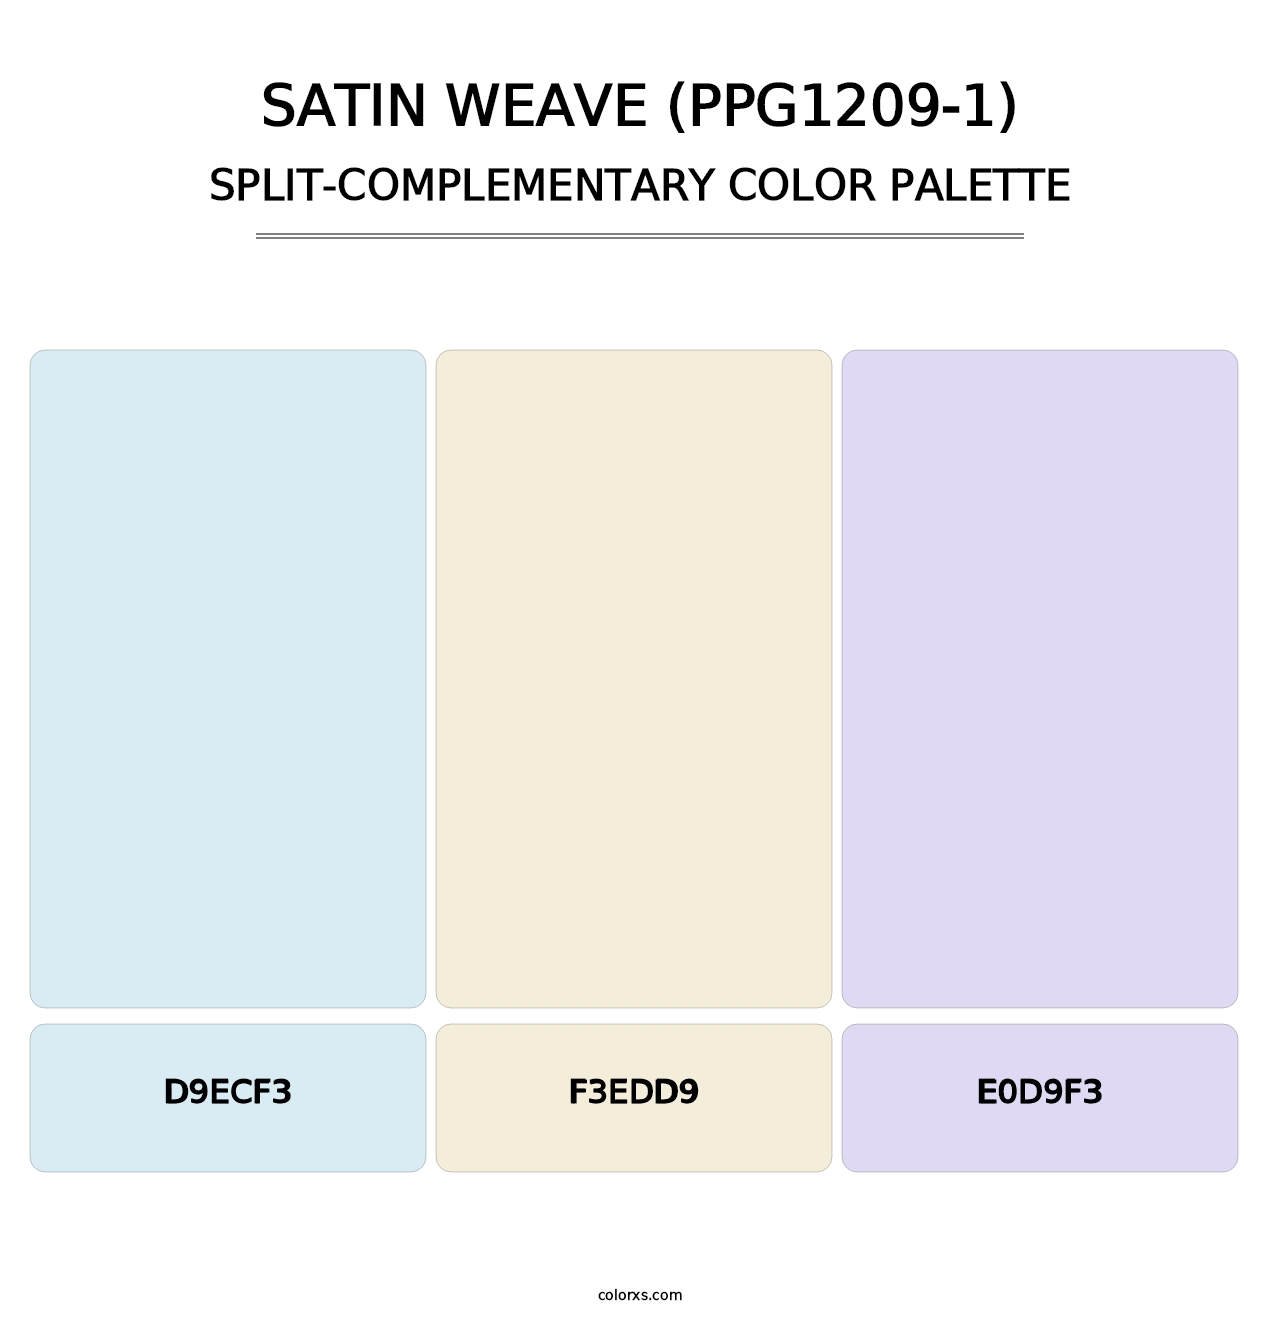 Satin Weave (PPG1209-1) - Split-Complementary Color Palette